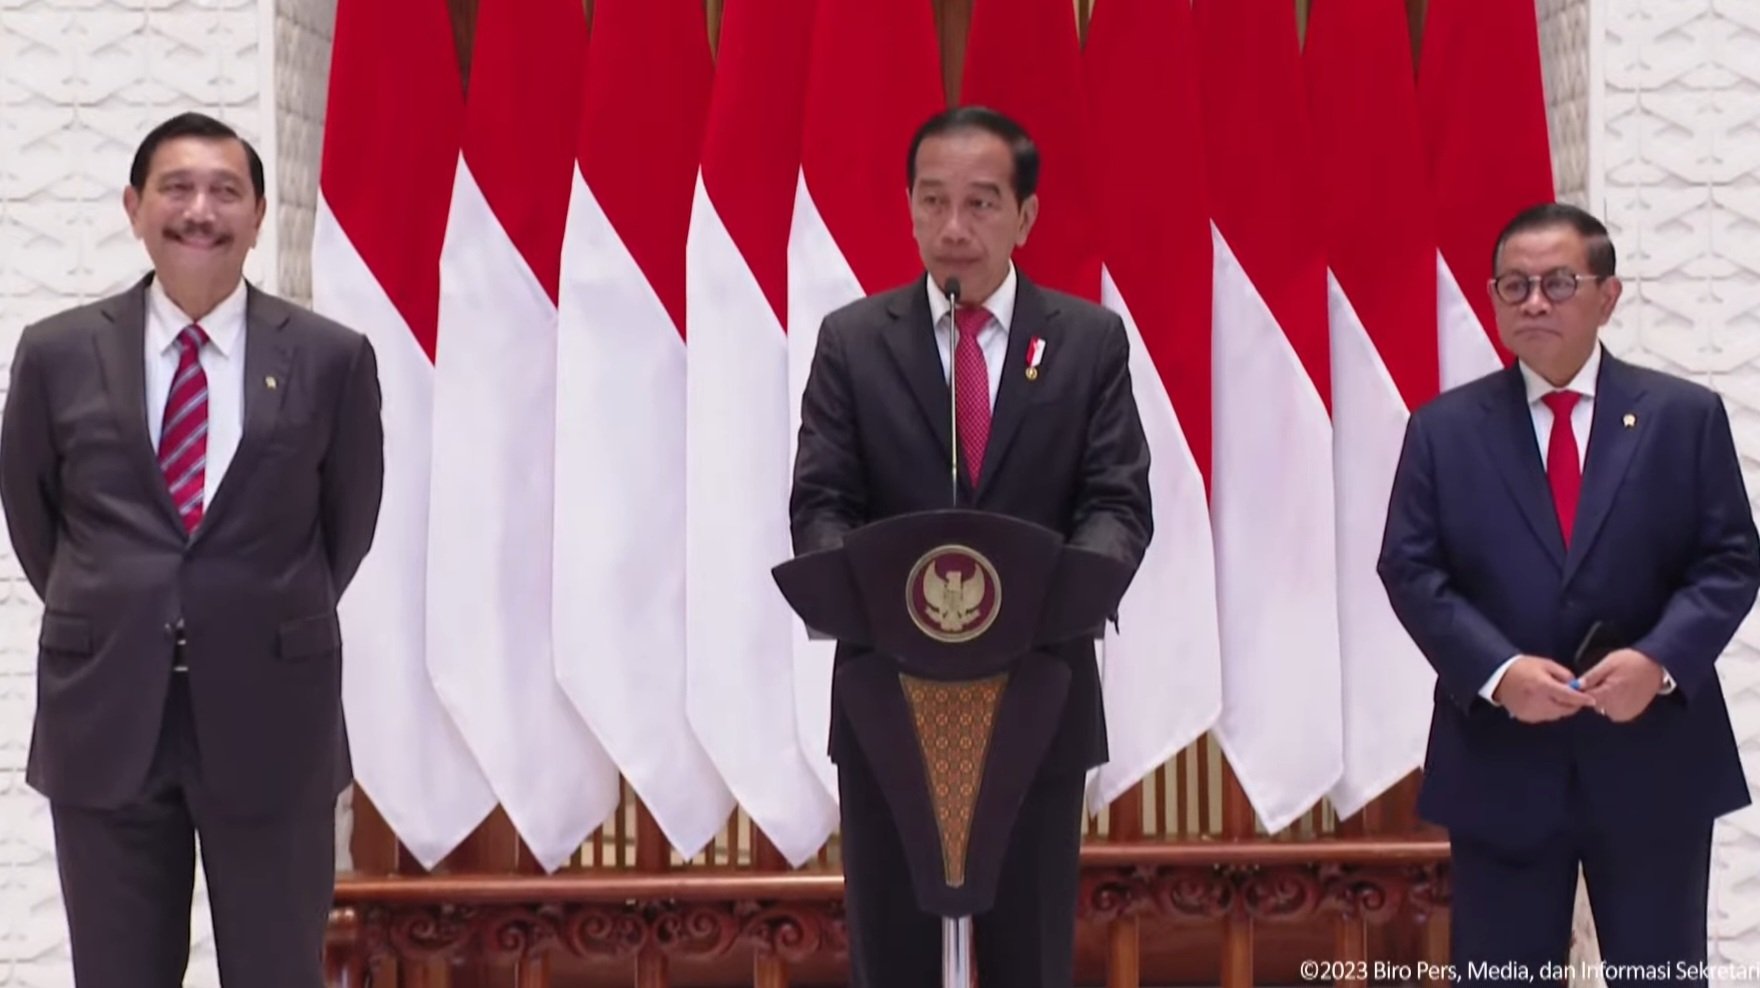 Presiden Joko Widodo memberi keterangan di Istana Negara (Sinpo.id/Setkab)